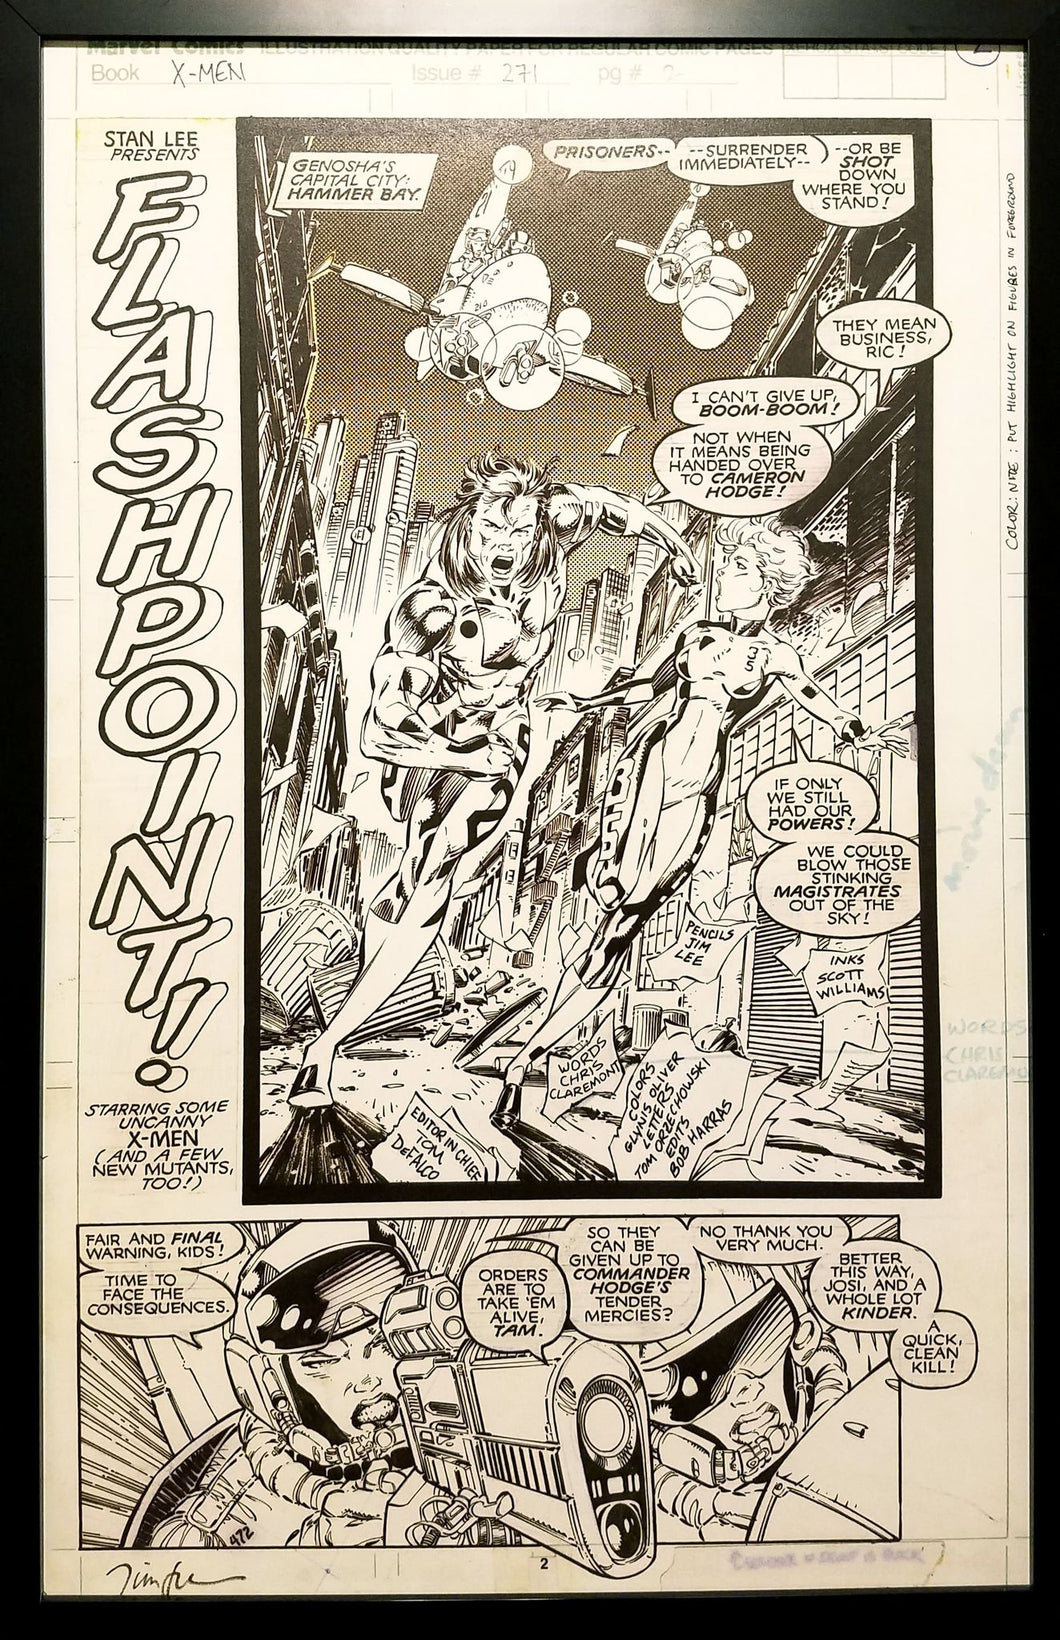 X-Men #271 pg. 2 Boom Boom Jim Lee 11x17 FRAMED Original Art Poster Marvel Comics